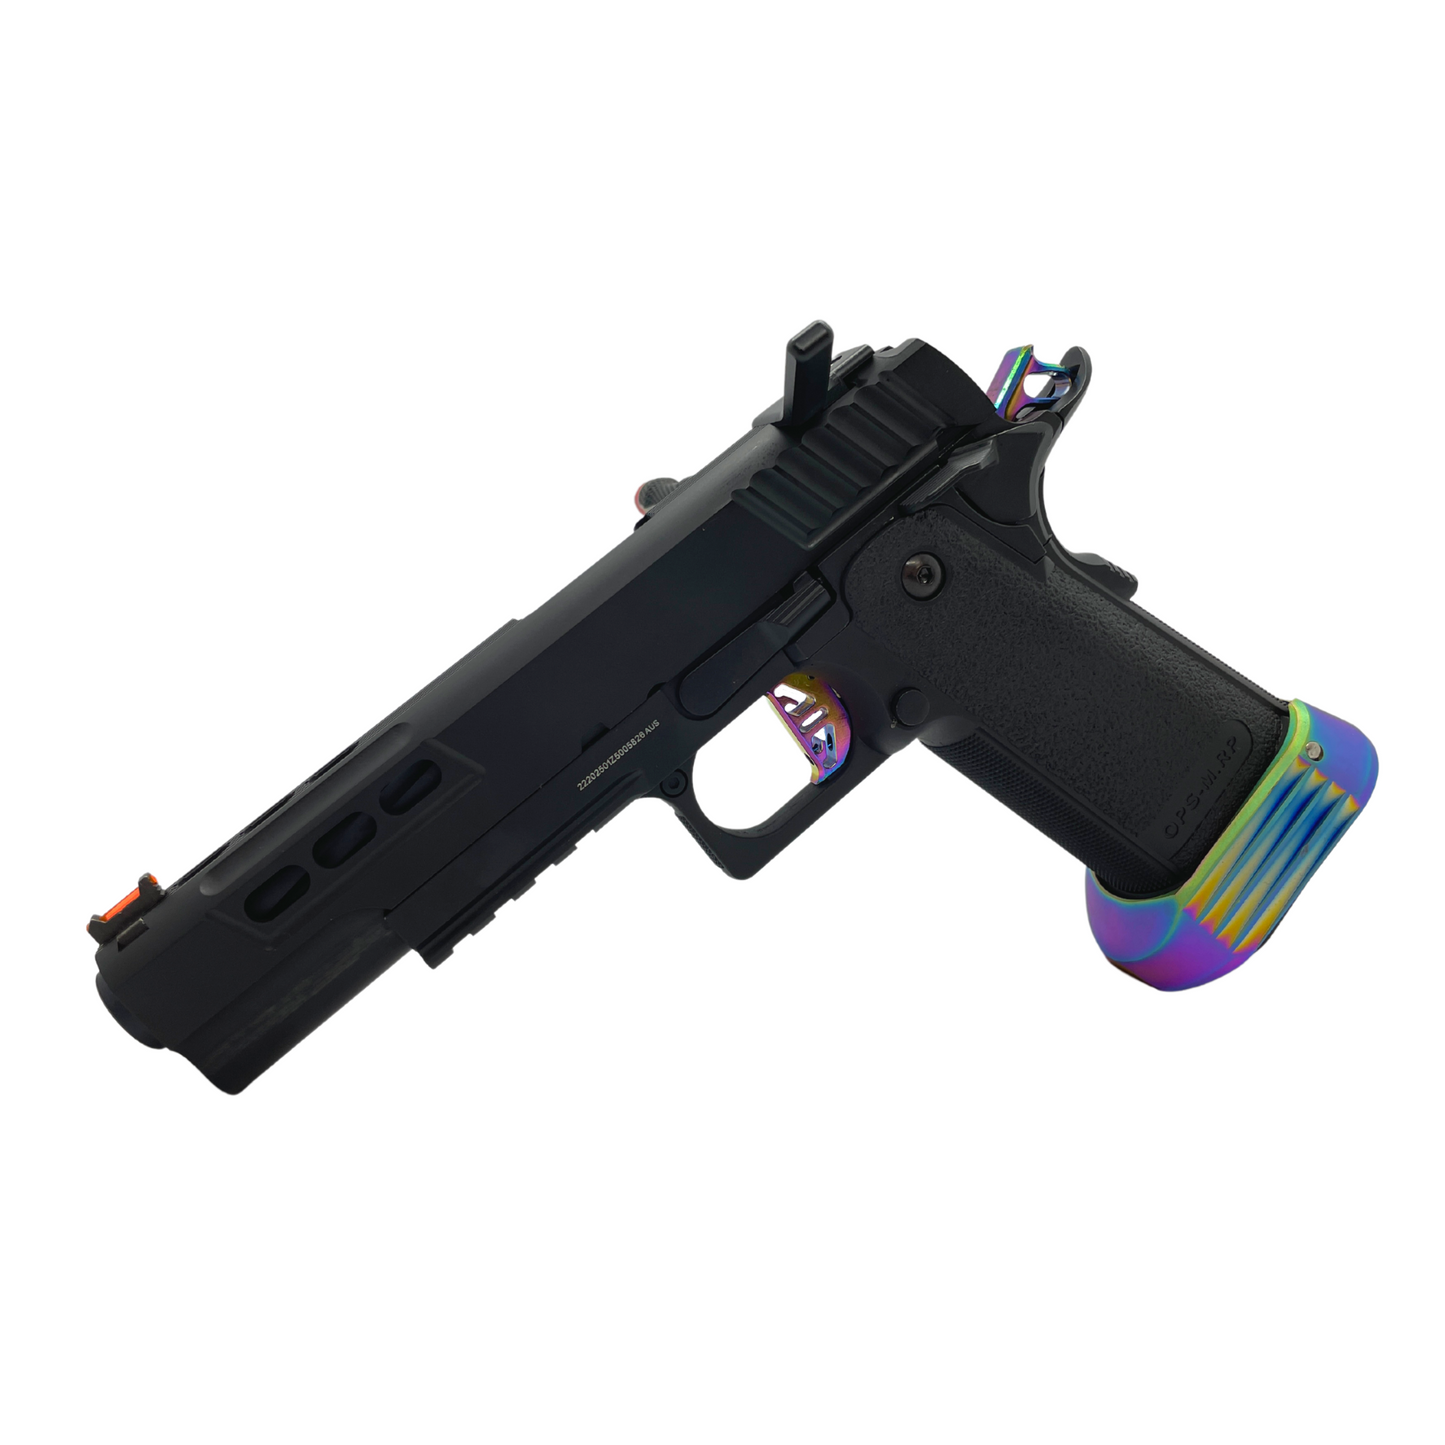 „Slick“ Custom GBG G/E Hi-Capa 5.1 Gaspistole – Gel Blaster